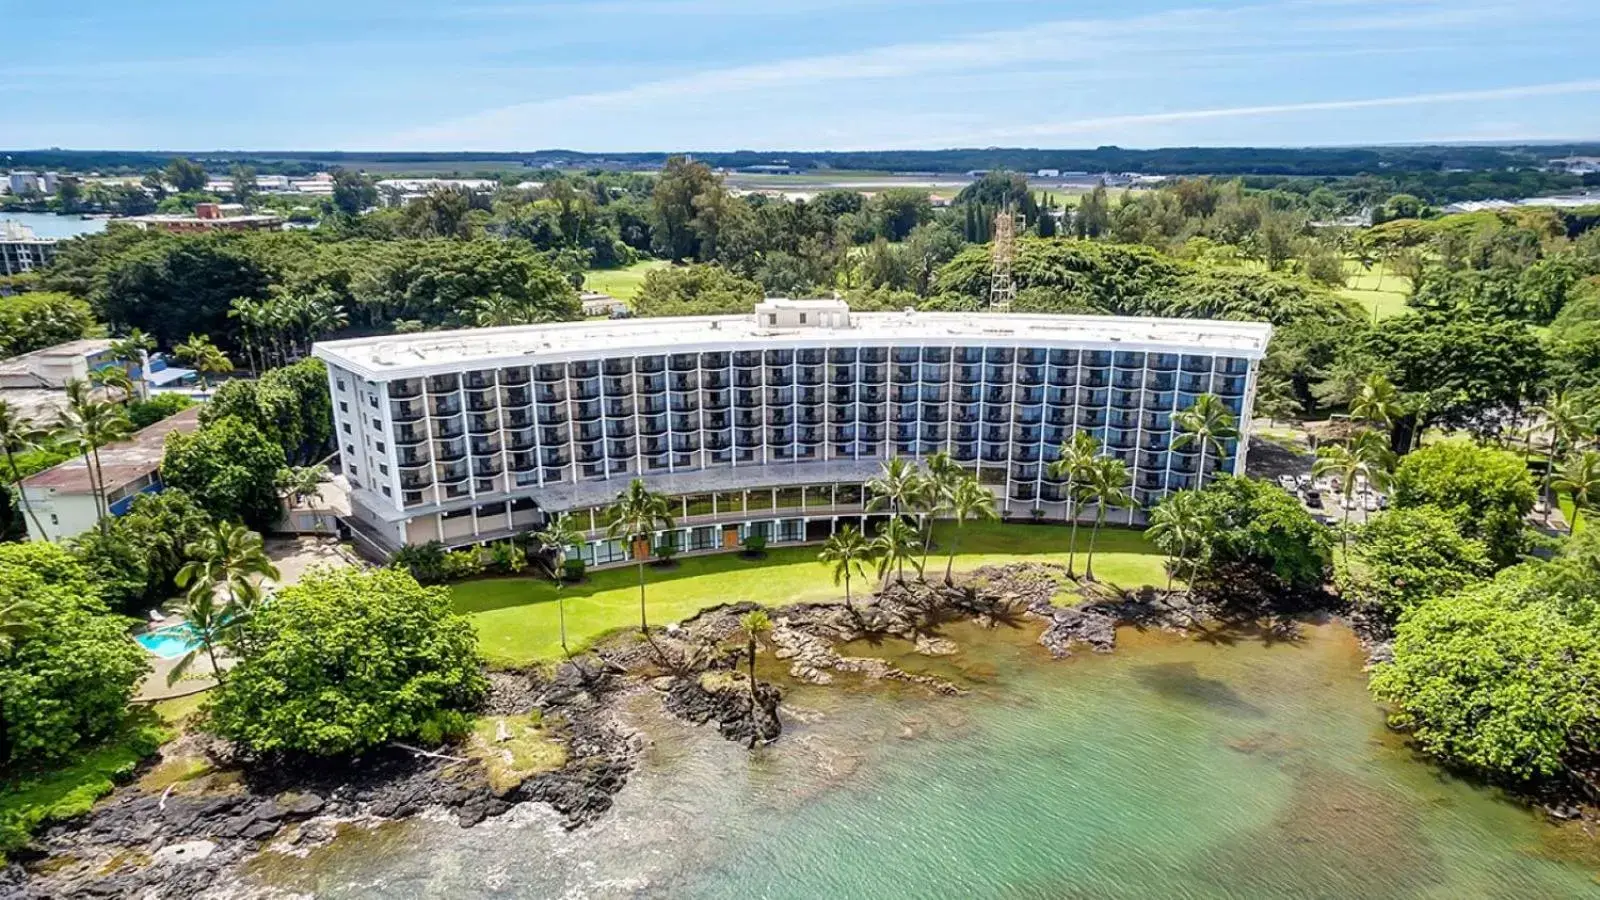 Property building, Bird's-eye View in Castle Hilo Hawaiian Hotel